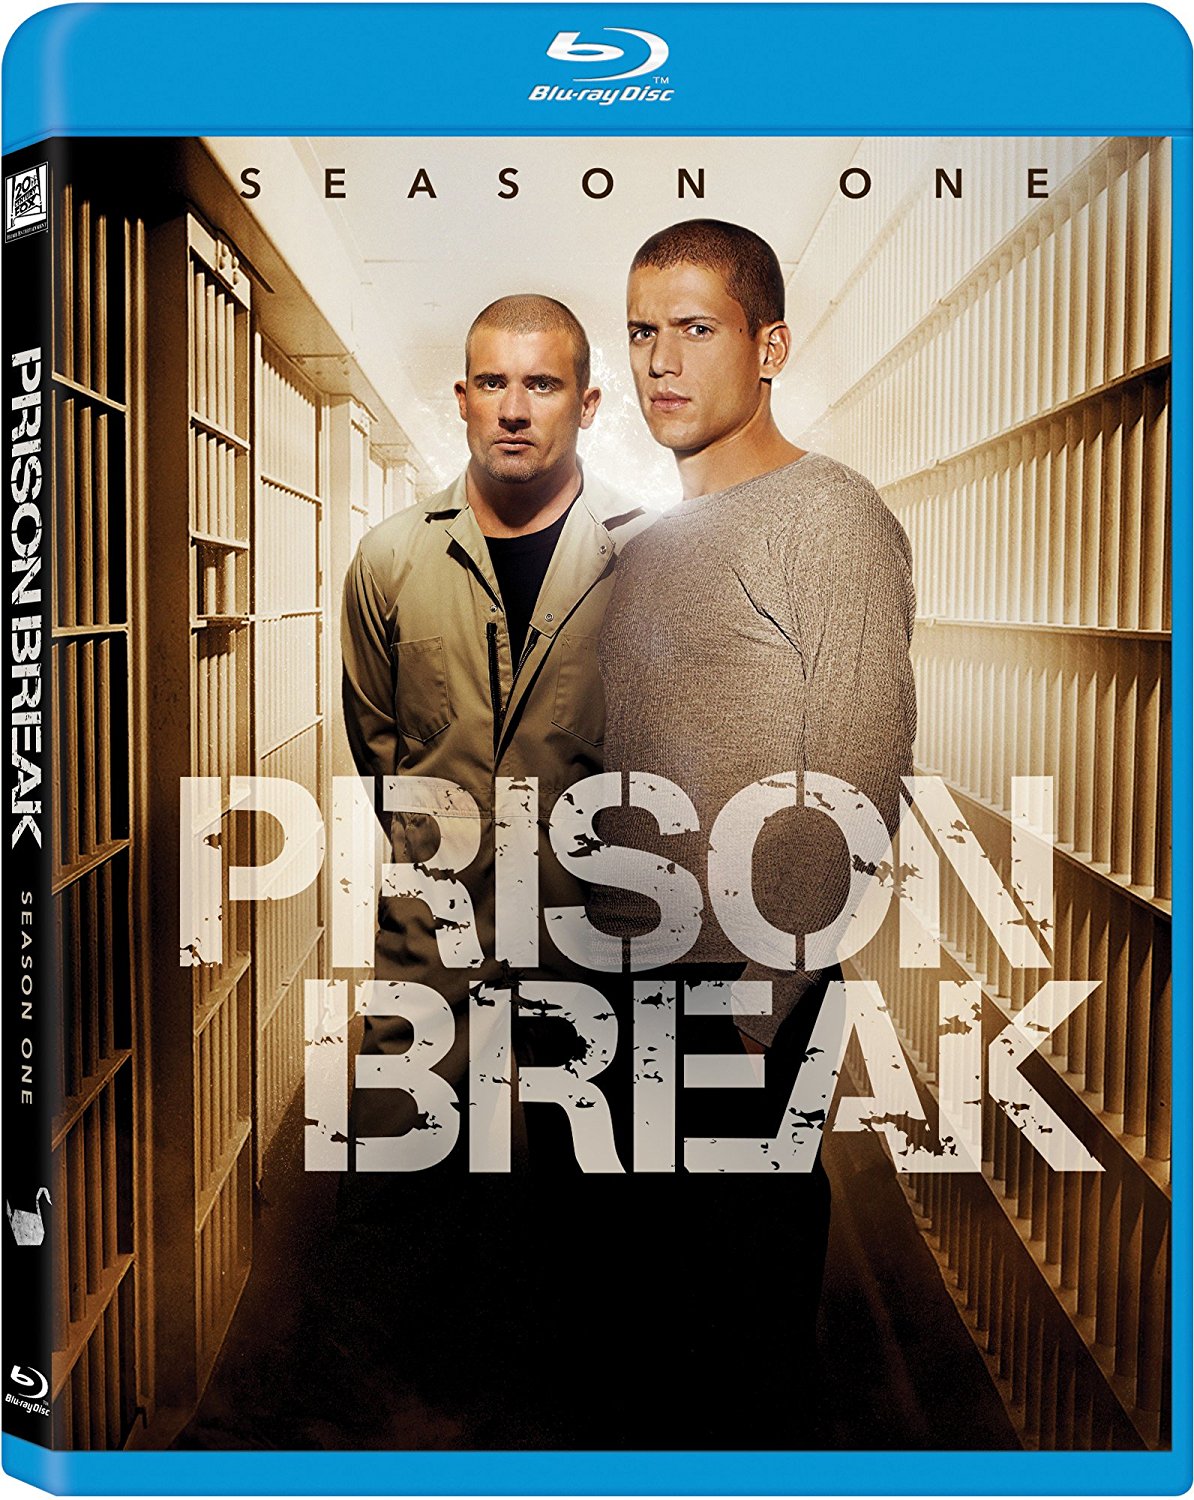 prison break season 1 wikia